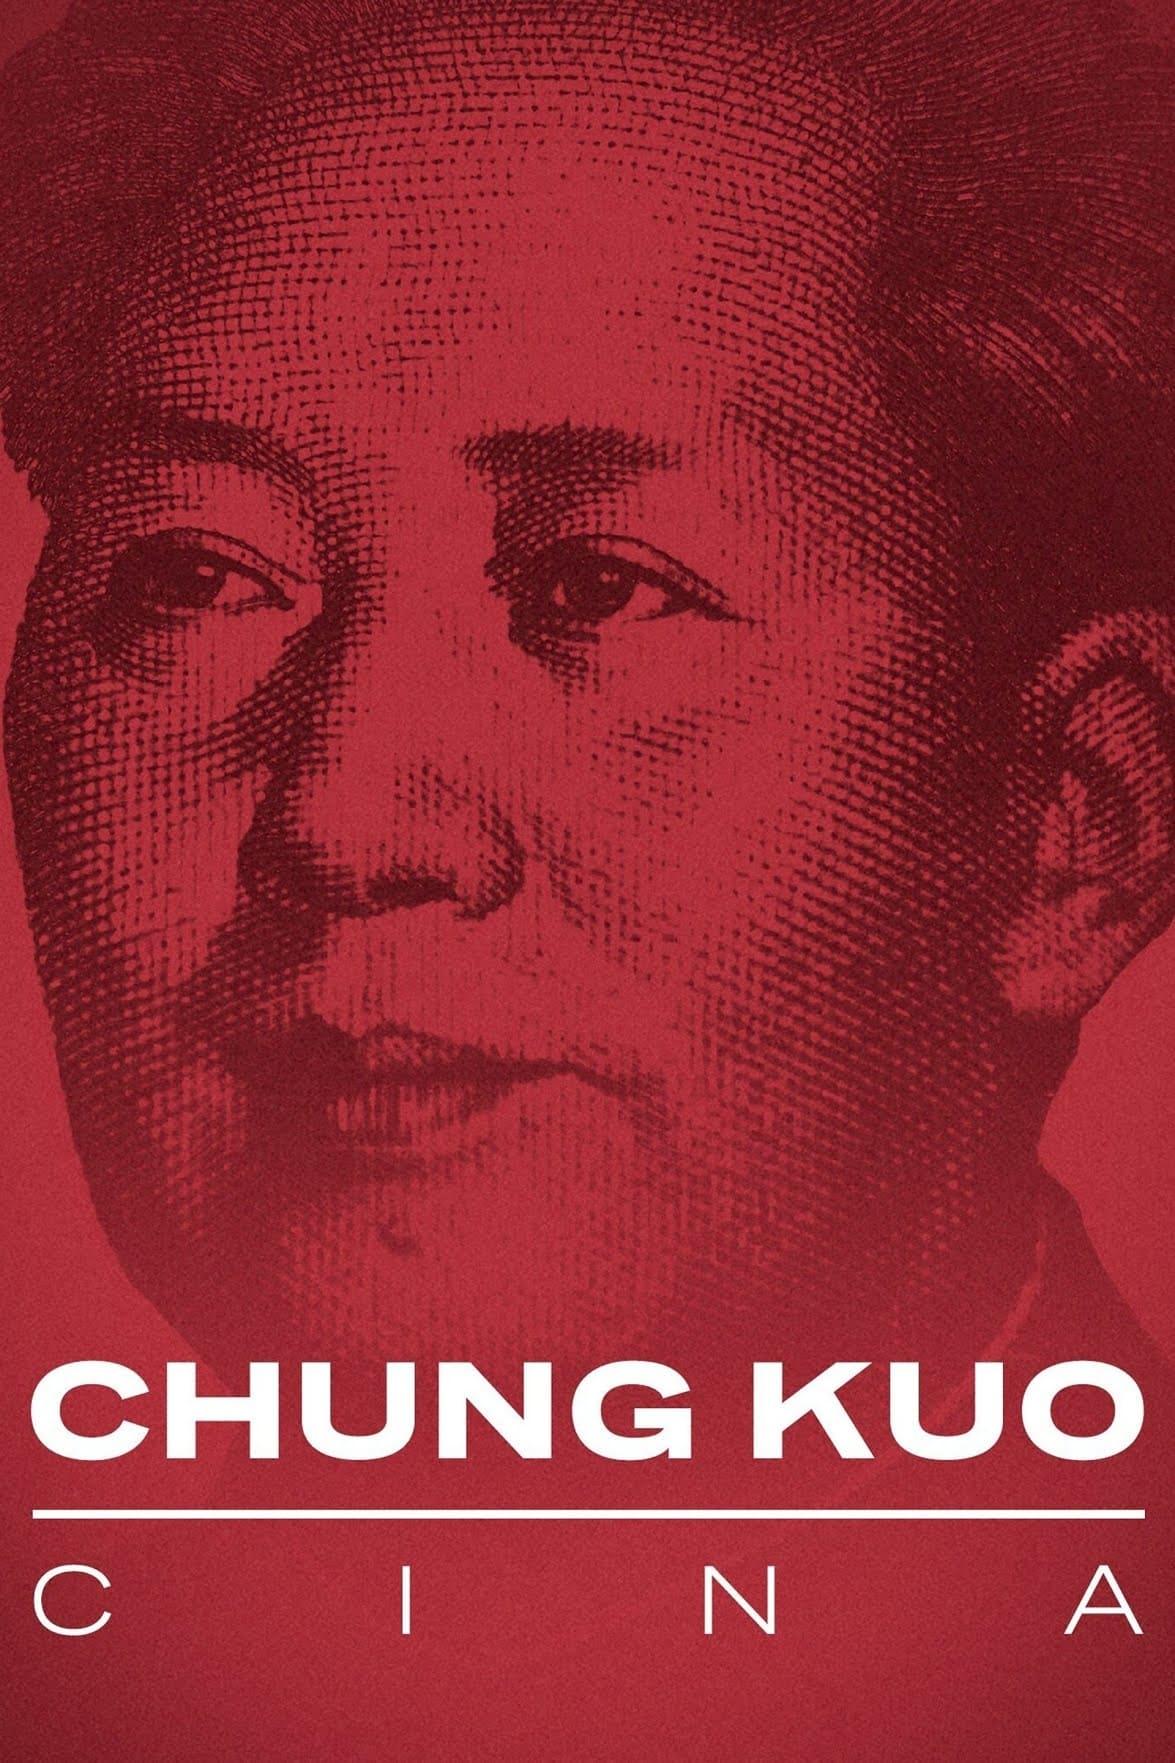 Chung Kuo: China poster